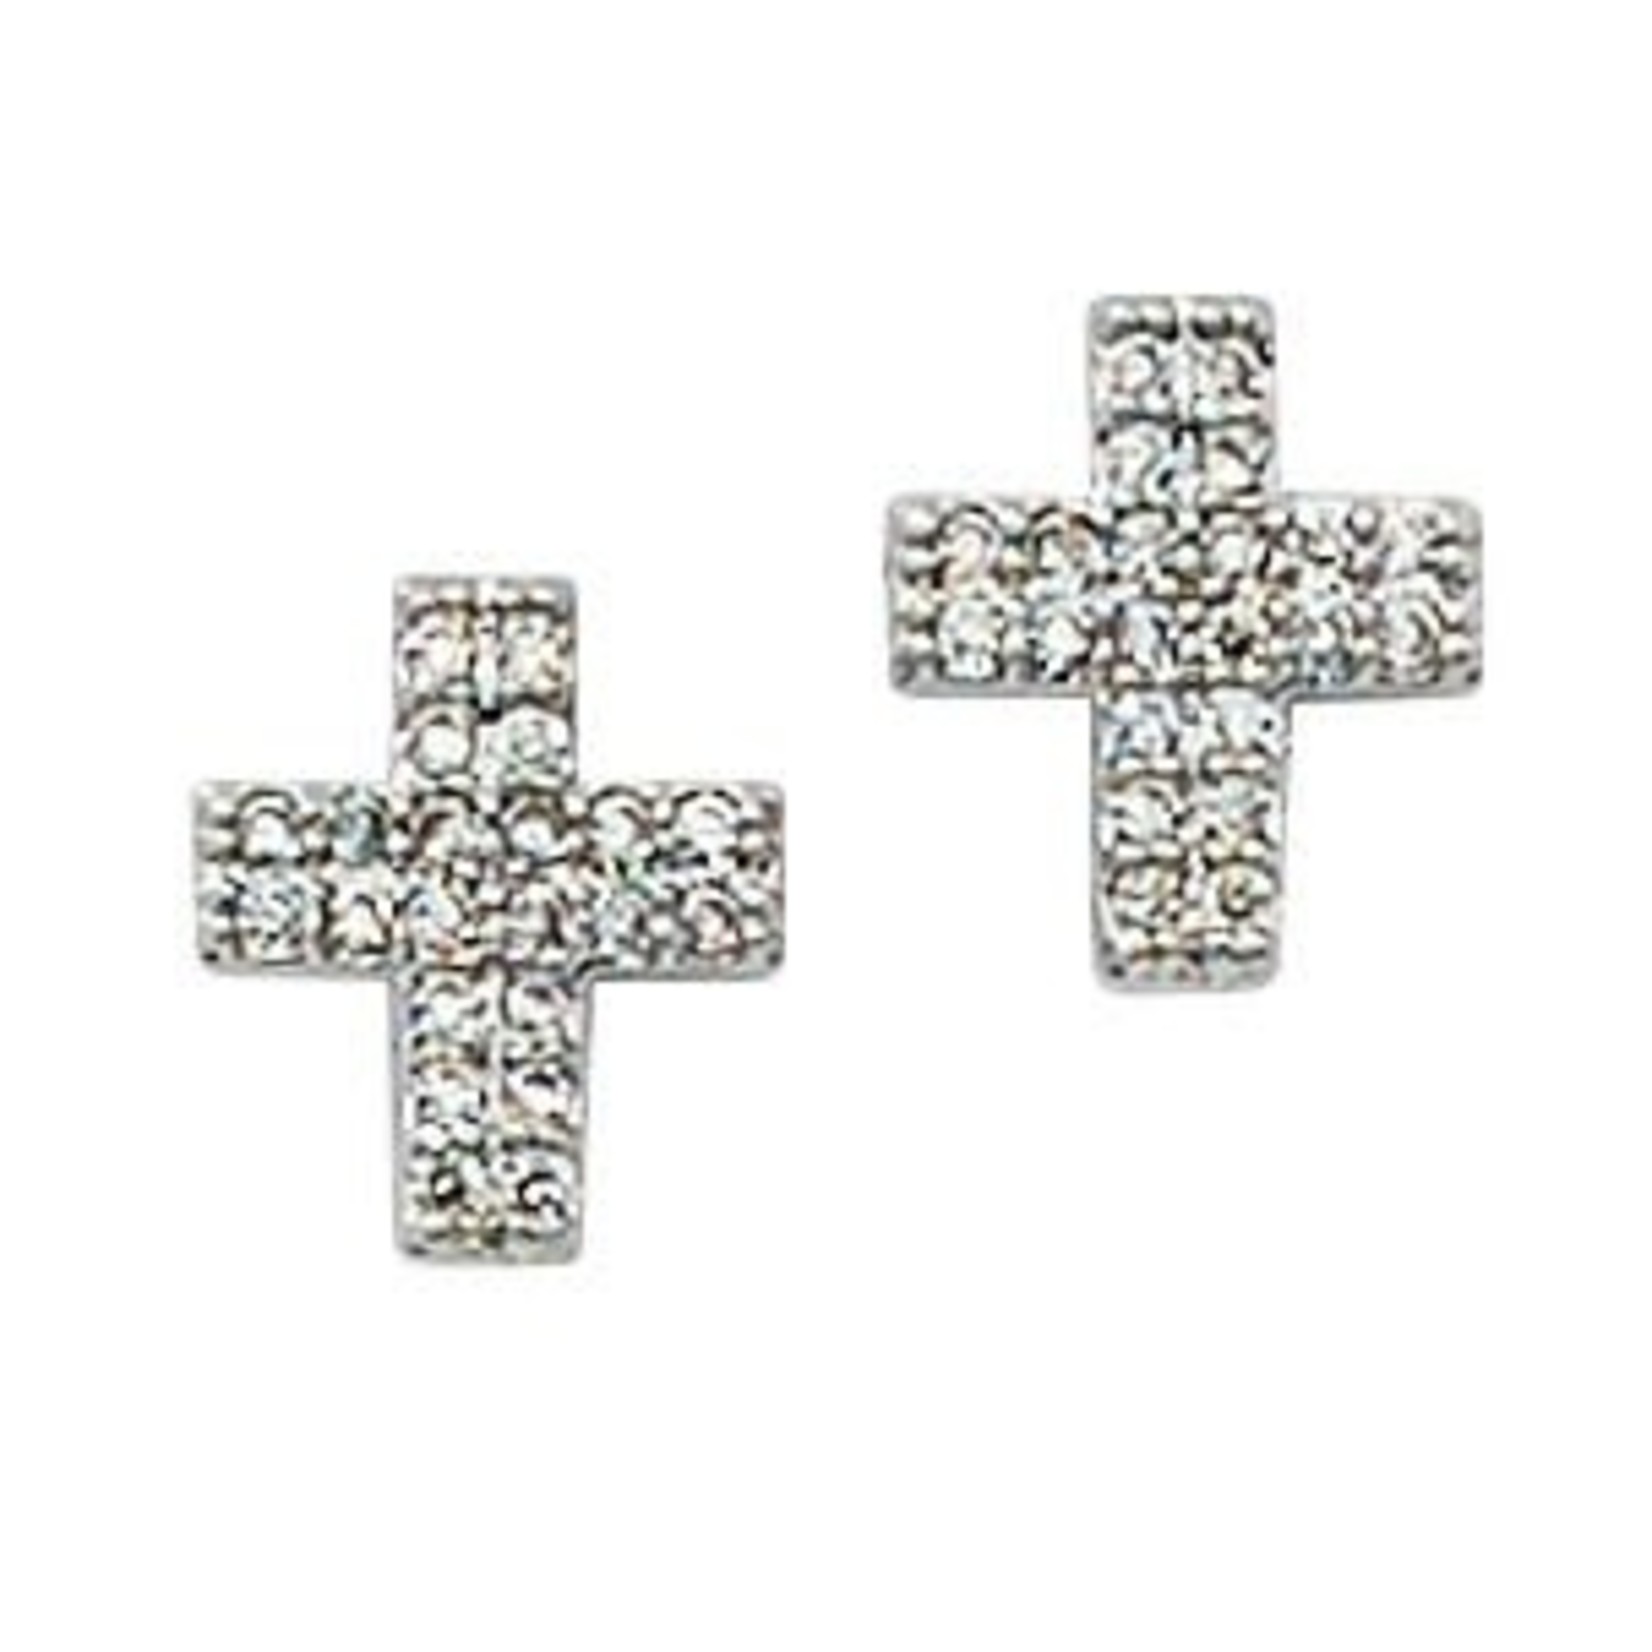 Earrings Silver and Crystal Cross